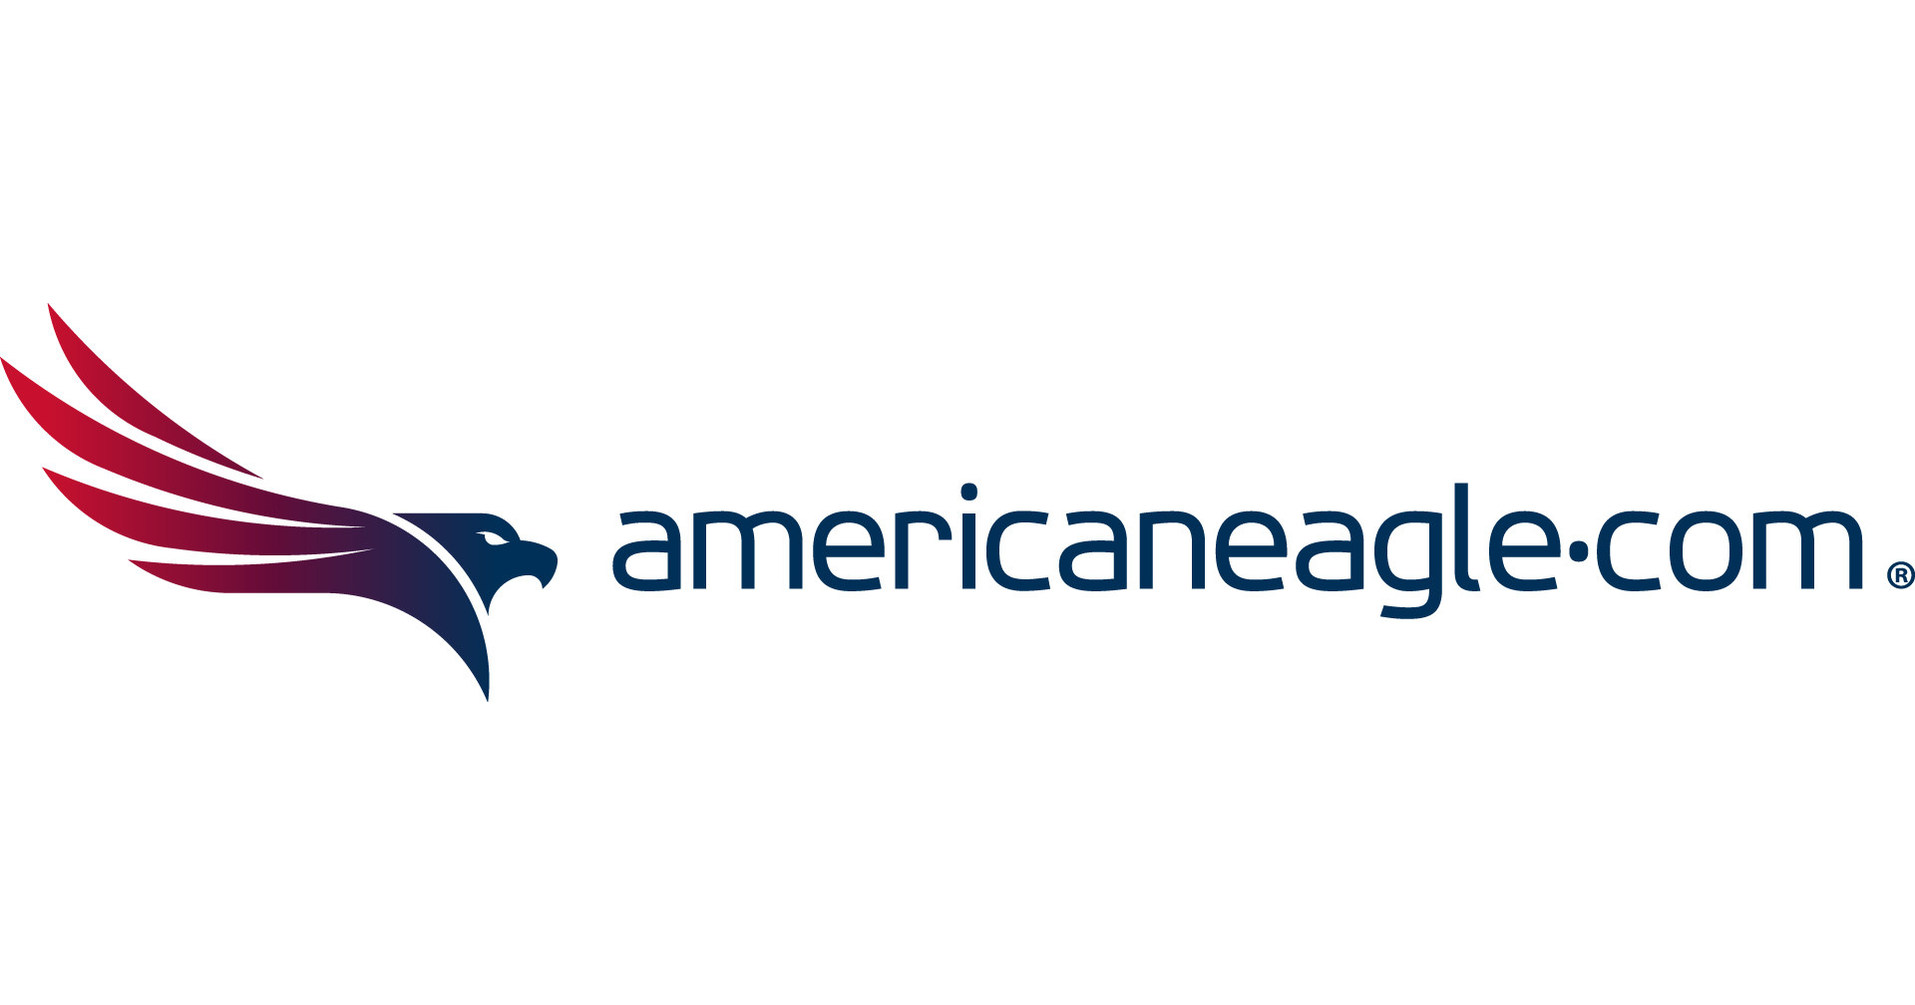 Americaneagle.com Makes Sixth Appearance on Inc. 5000 List of Fastest ...